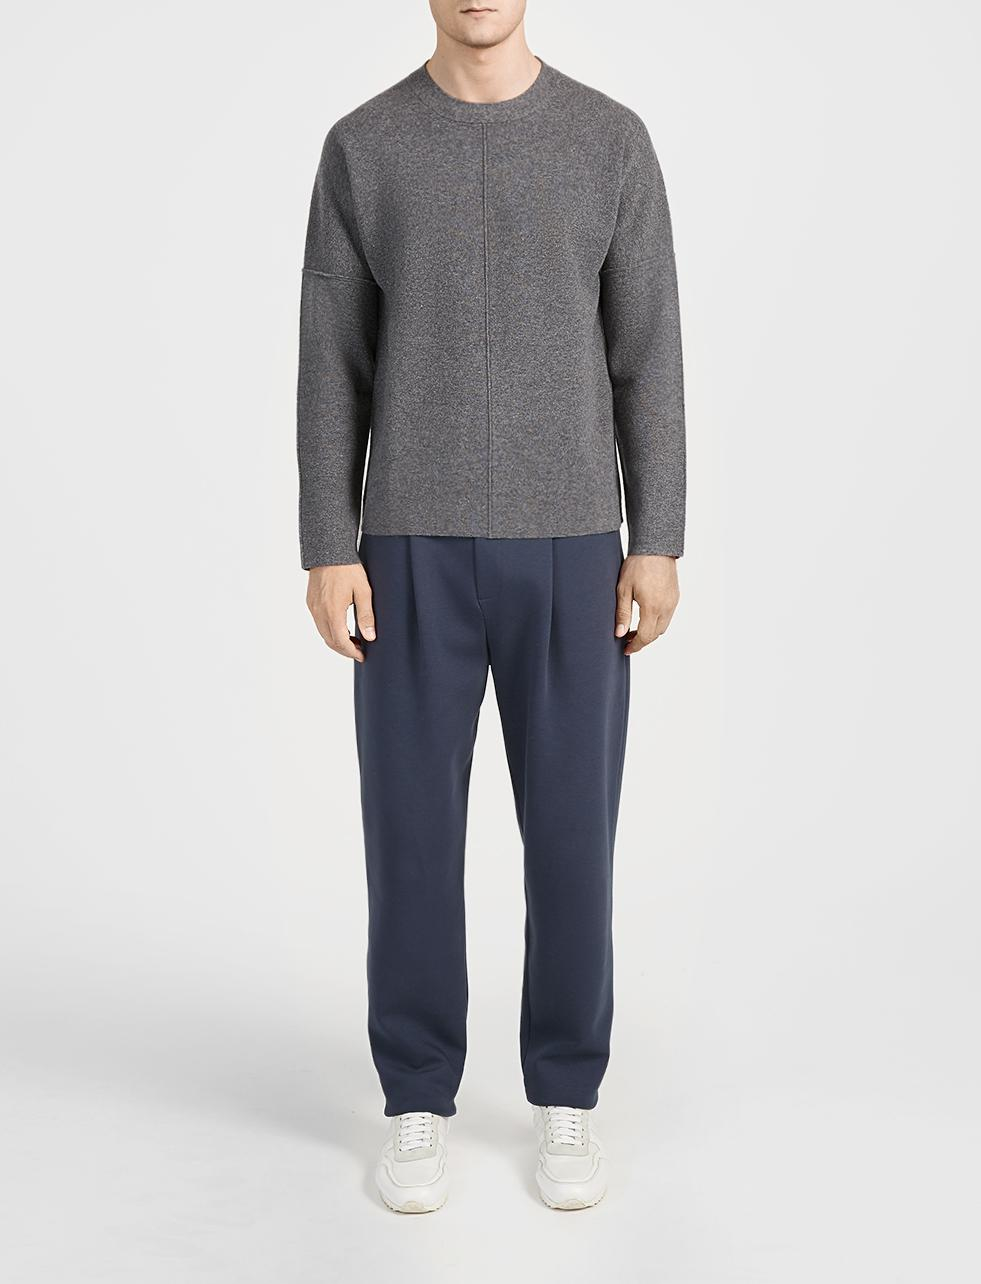 Lyst - Joseph Milano Sweater in Gray for Men